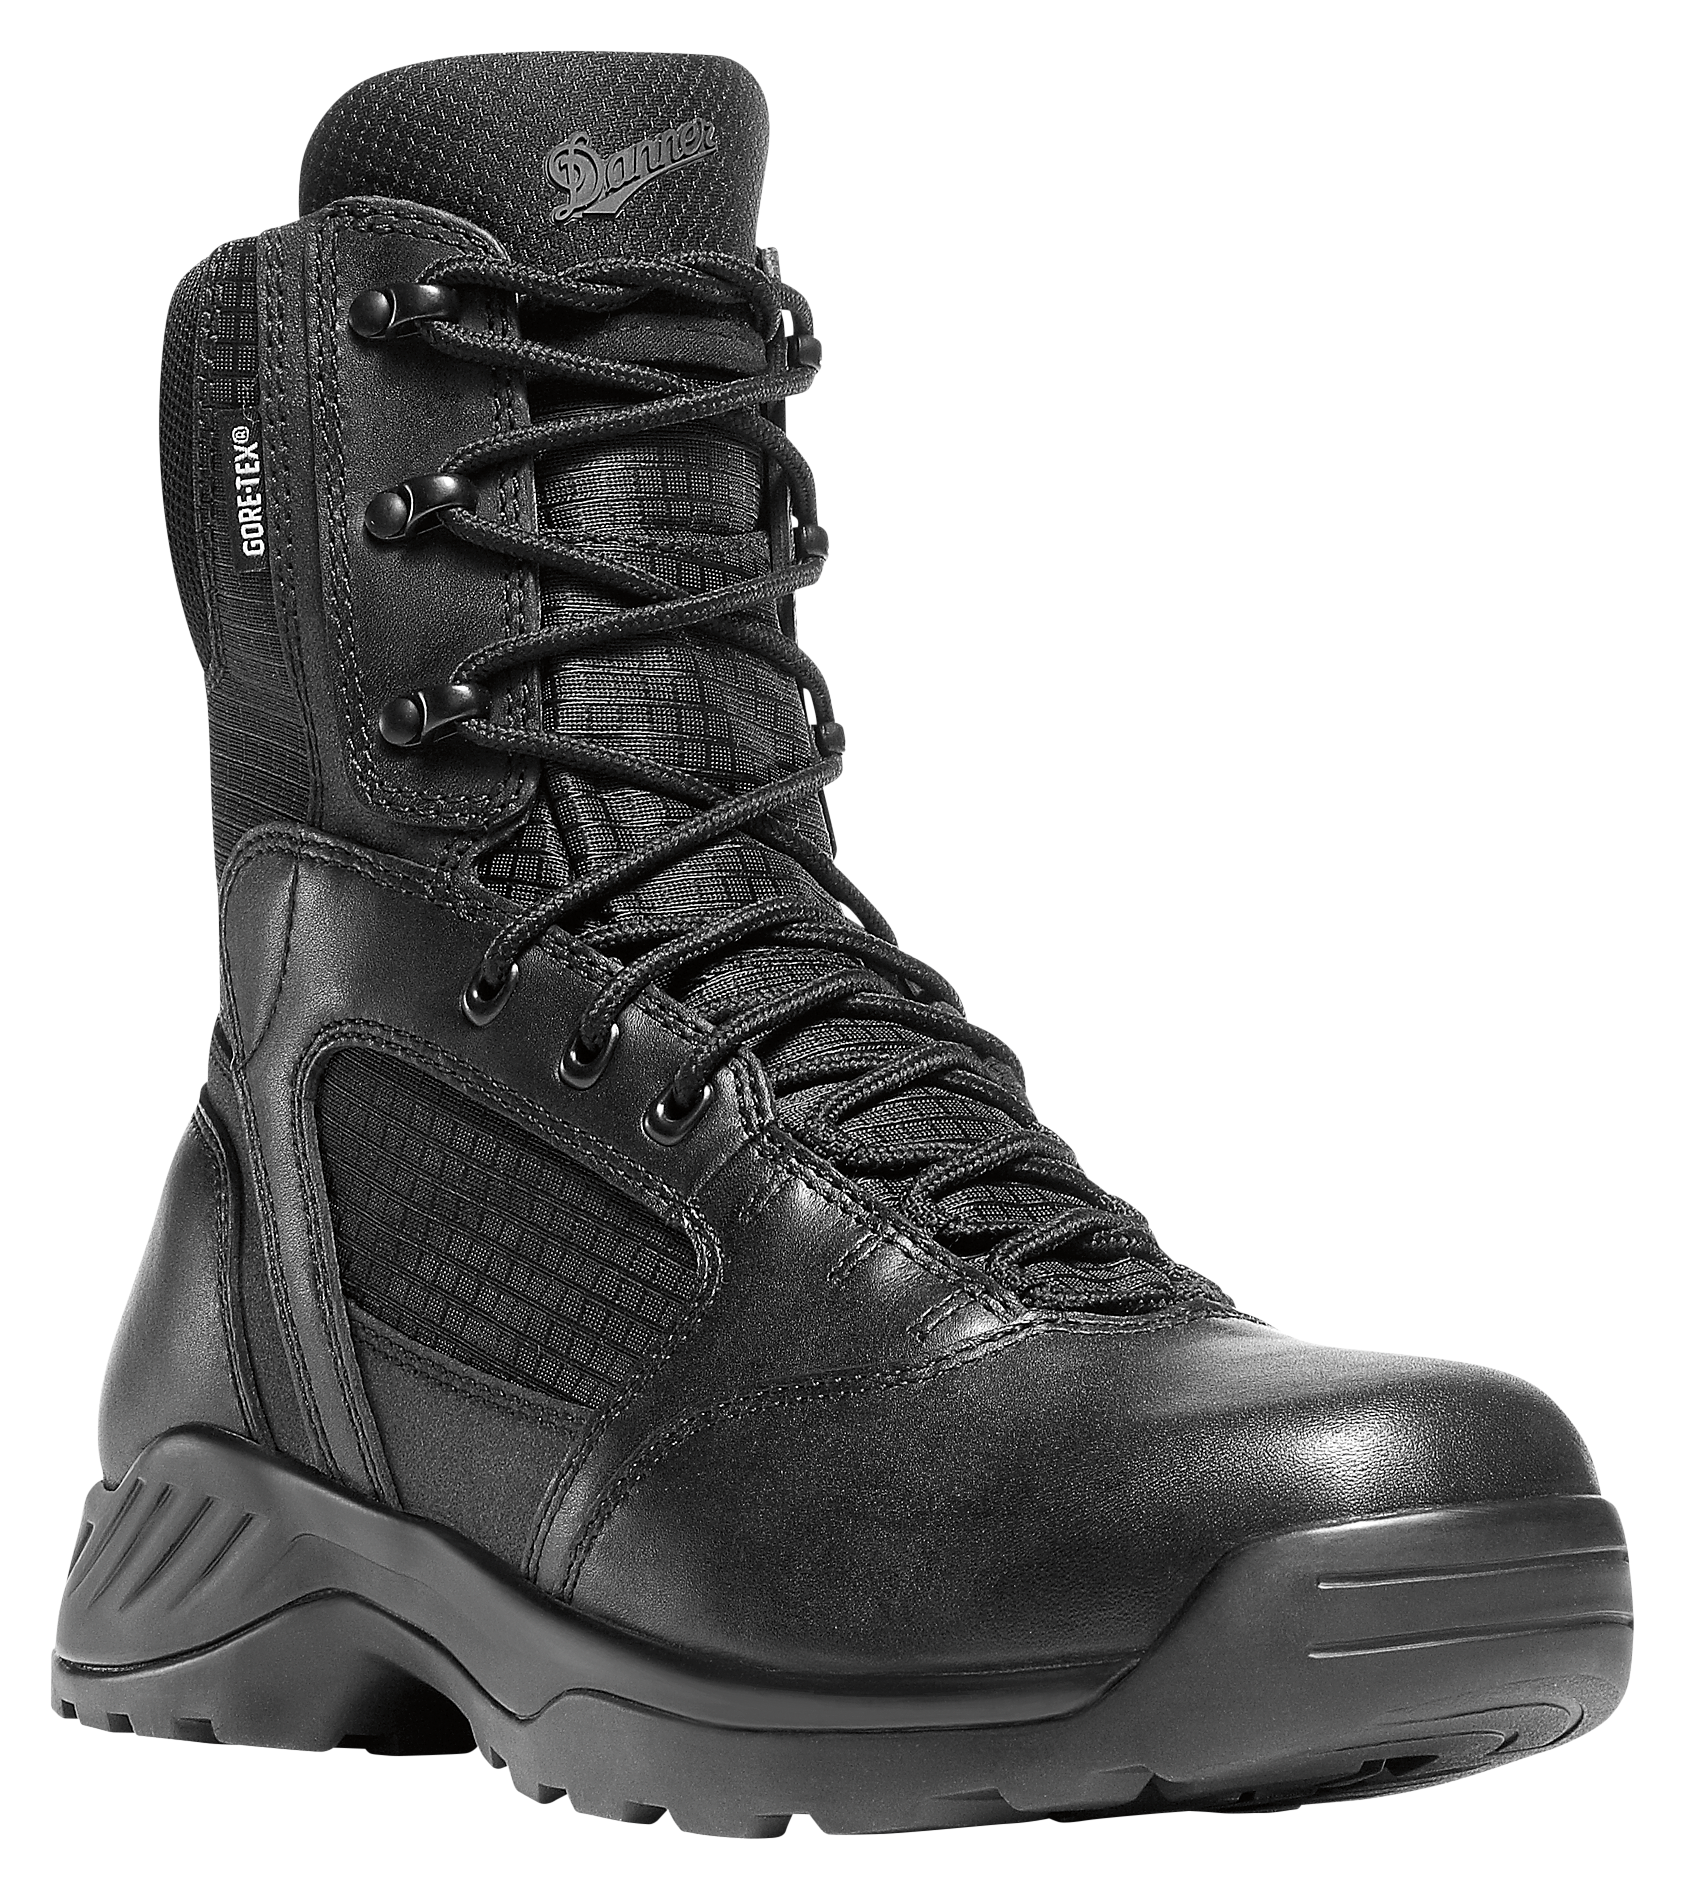 Danner Kinetic GTX Side-Zip Waterproof Tactical Duty Boots for Men - Black - 11.5W